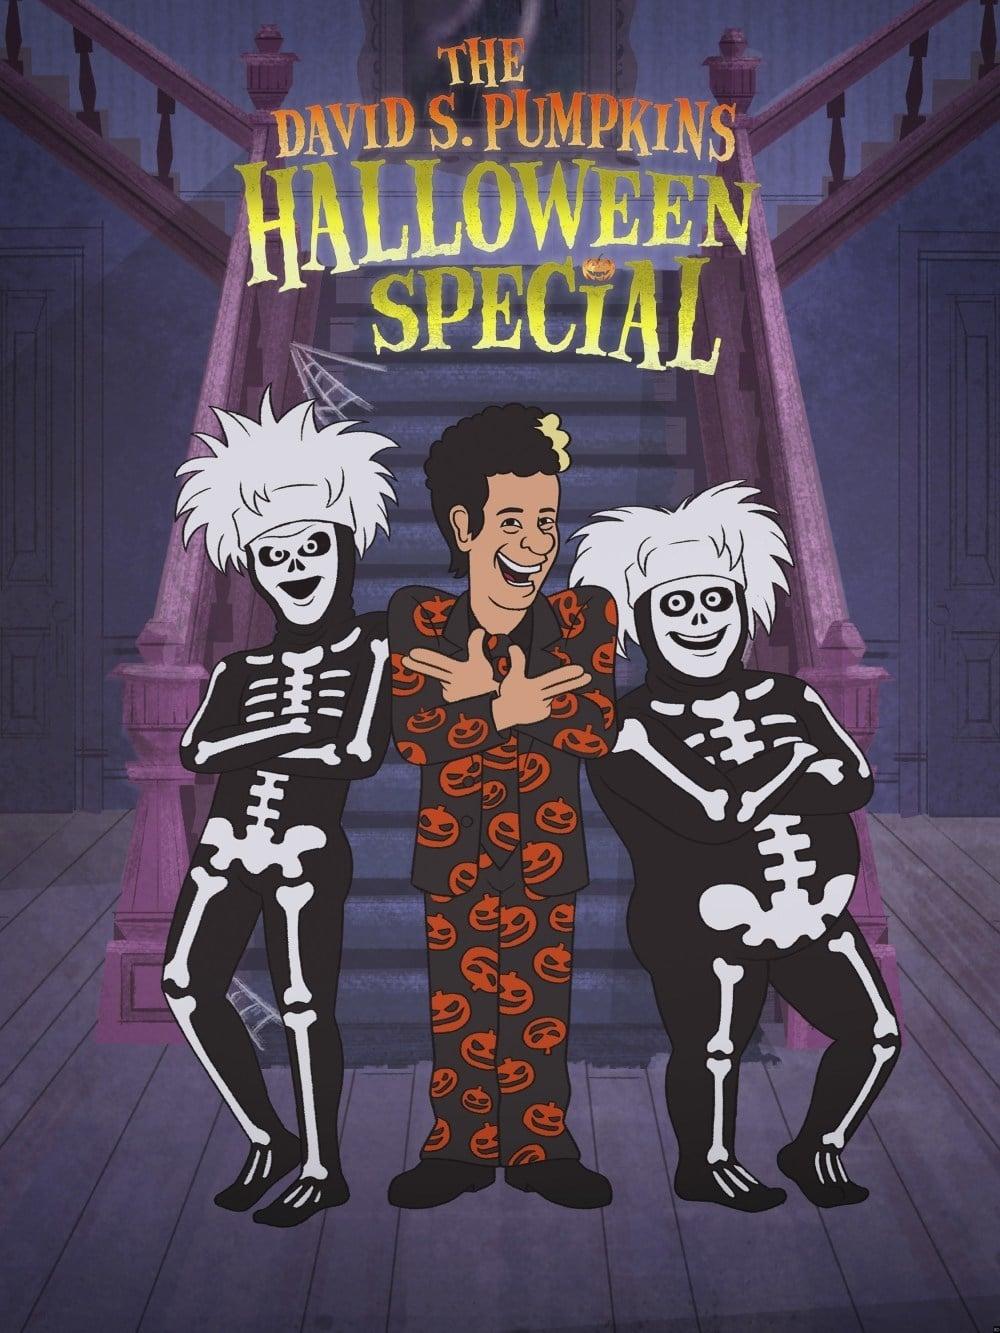 The David S. Pumpkins Halloween Special poster